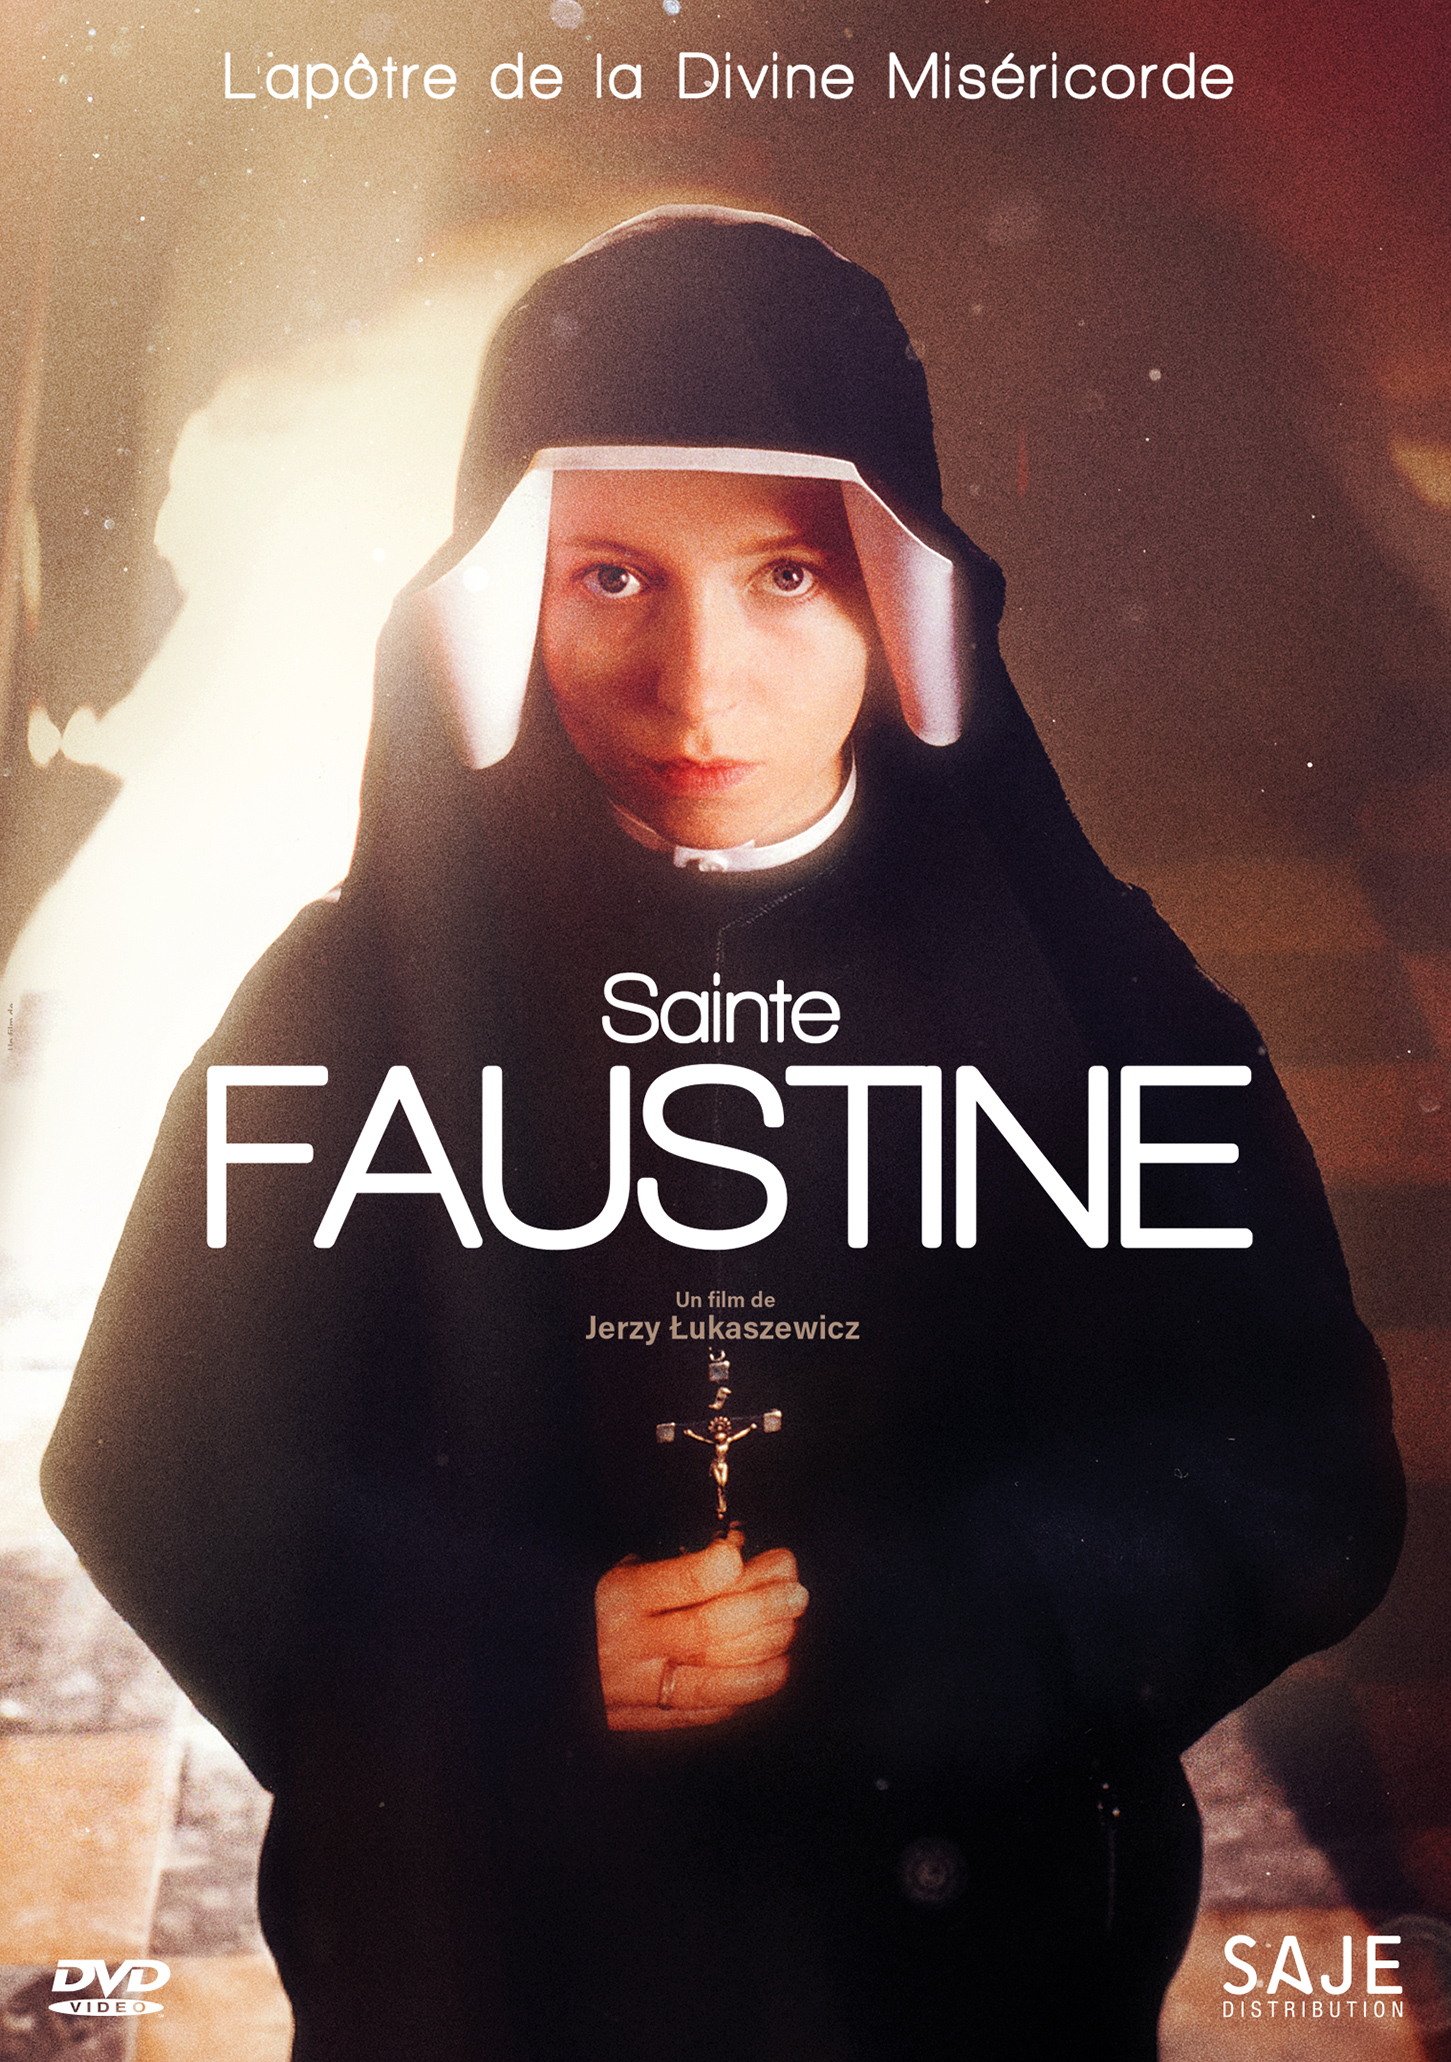 Faustine